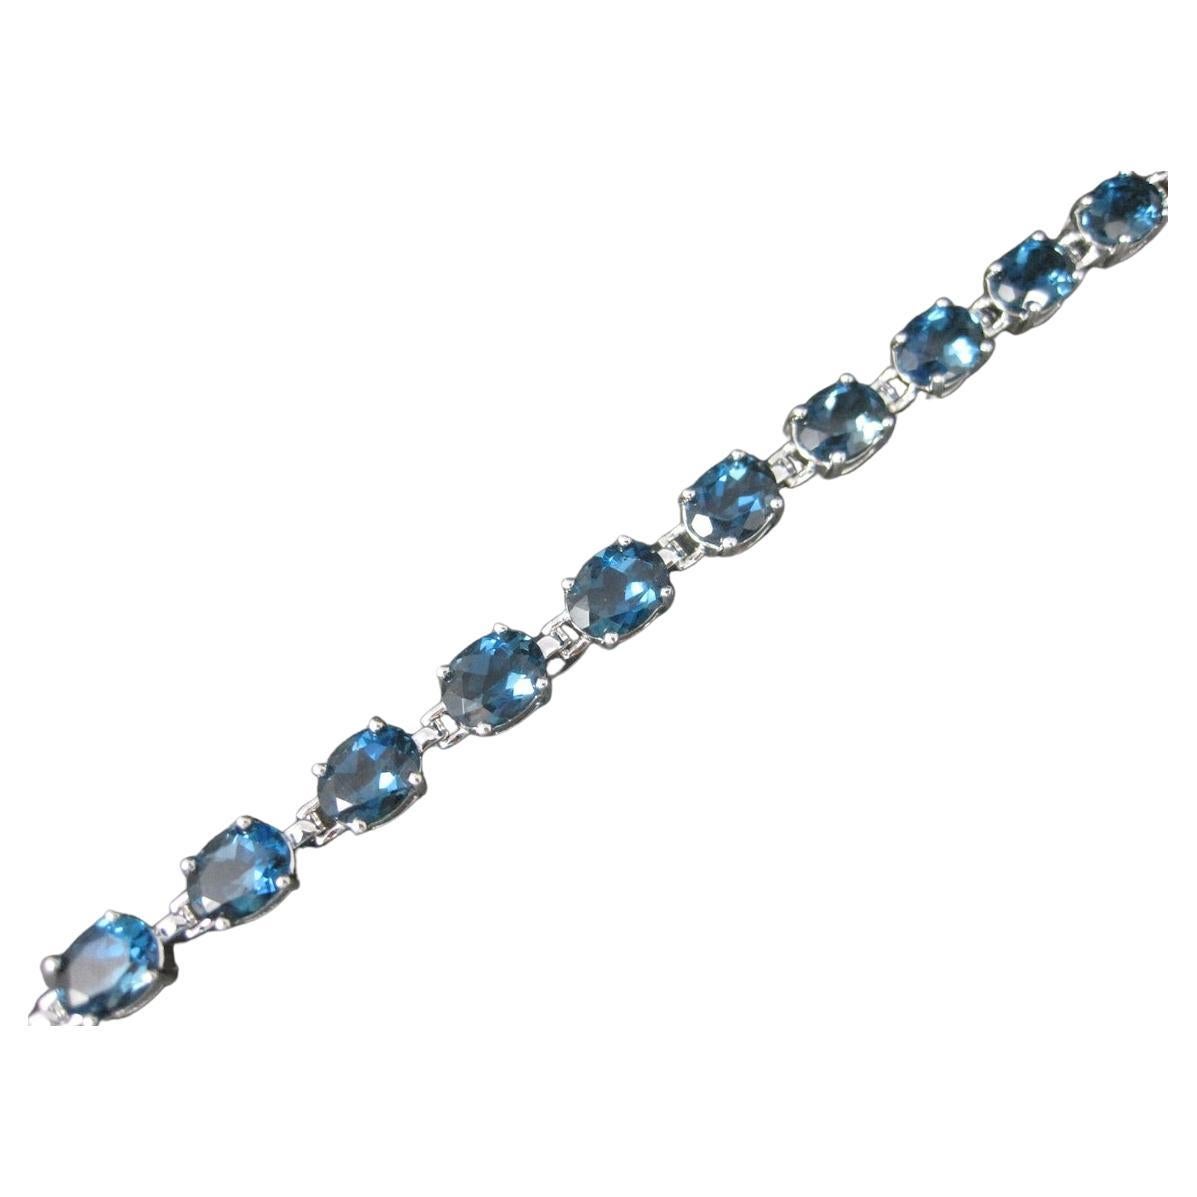 Sterling Silver 29 Carat Blue Topaz Bracelet 7.5 Inches